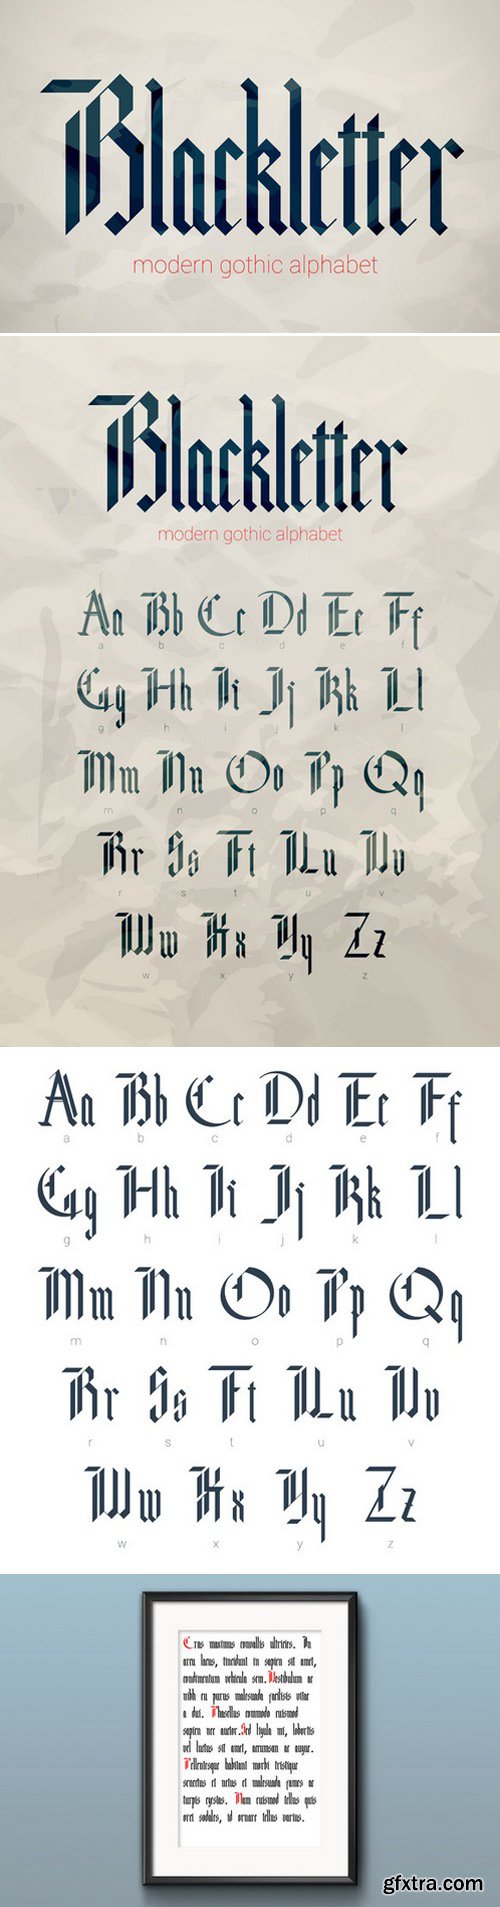 CM - Blackletter modern gothic font. 425205